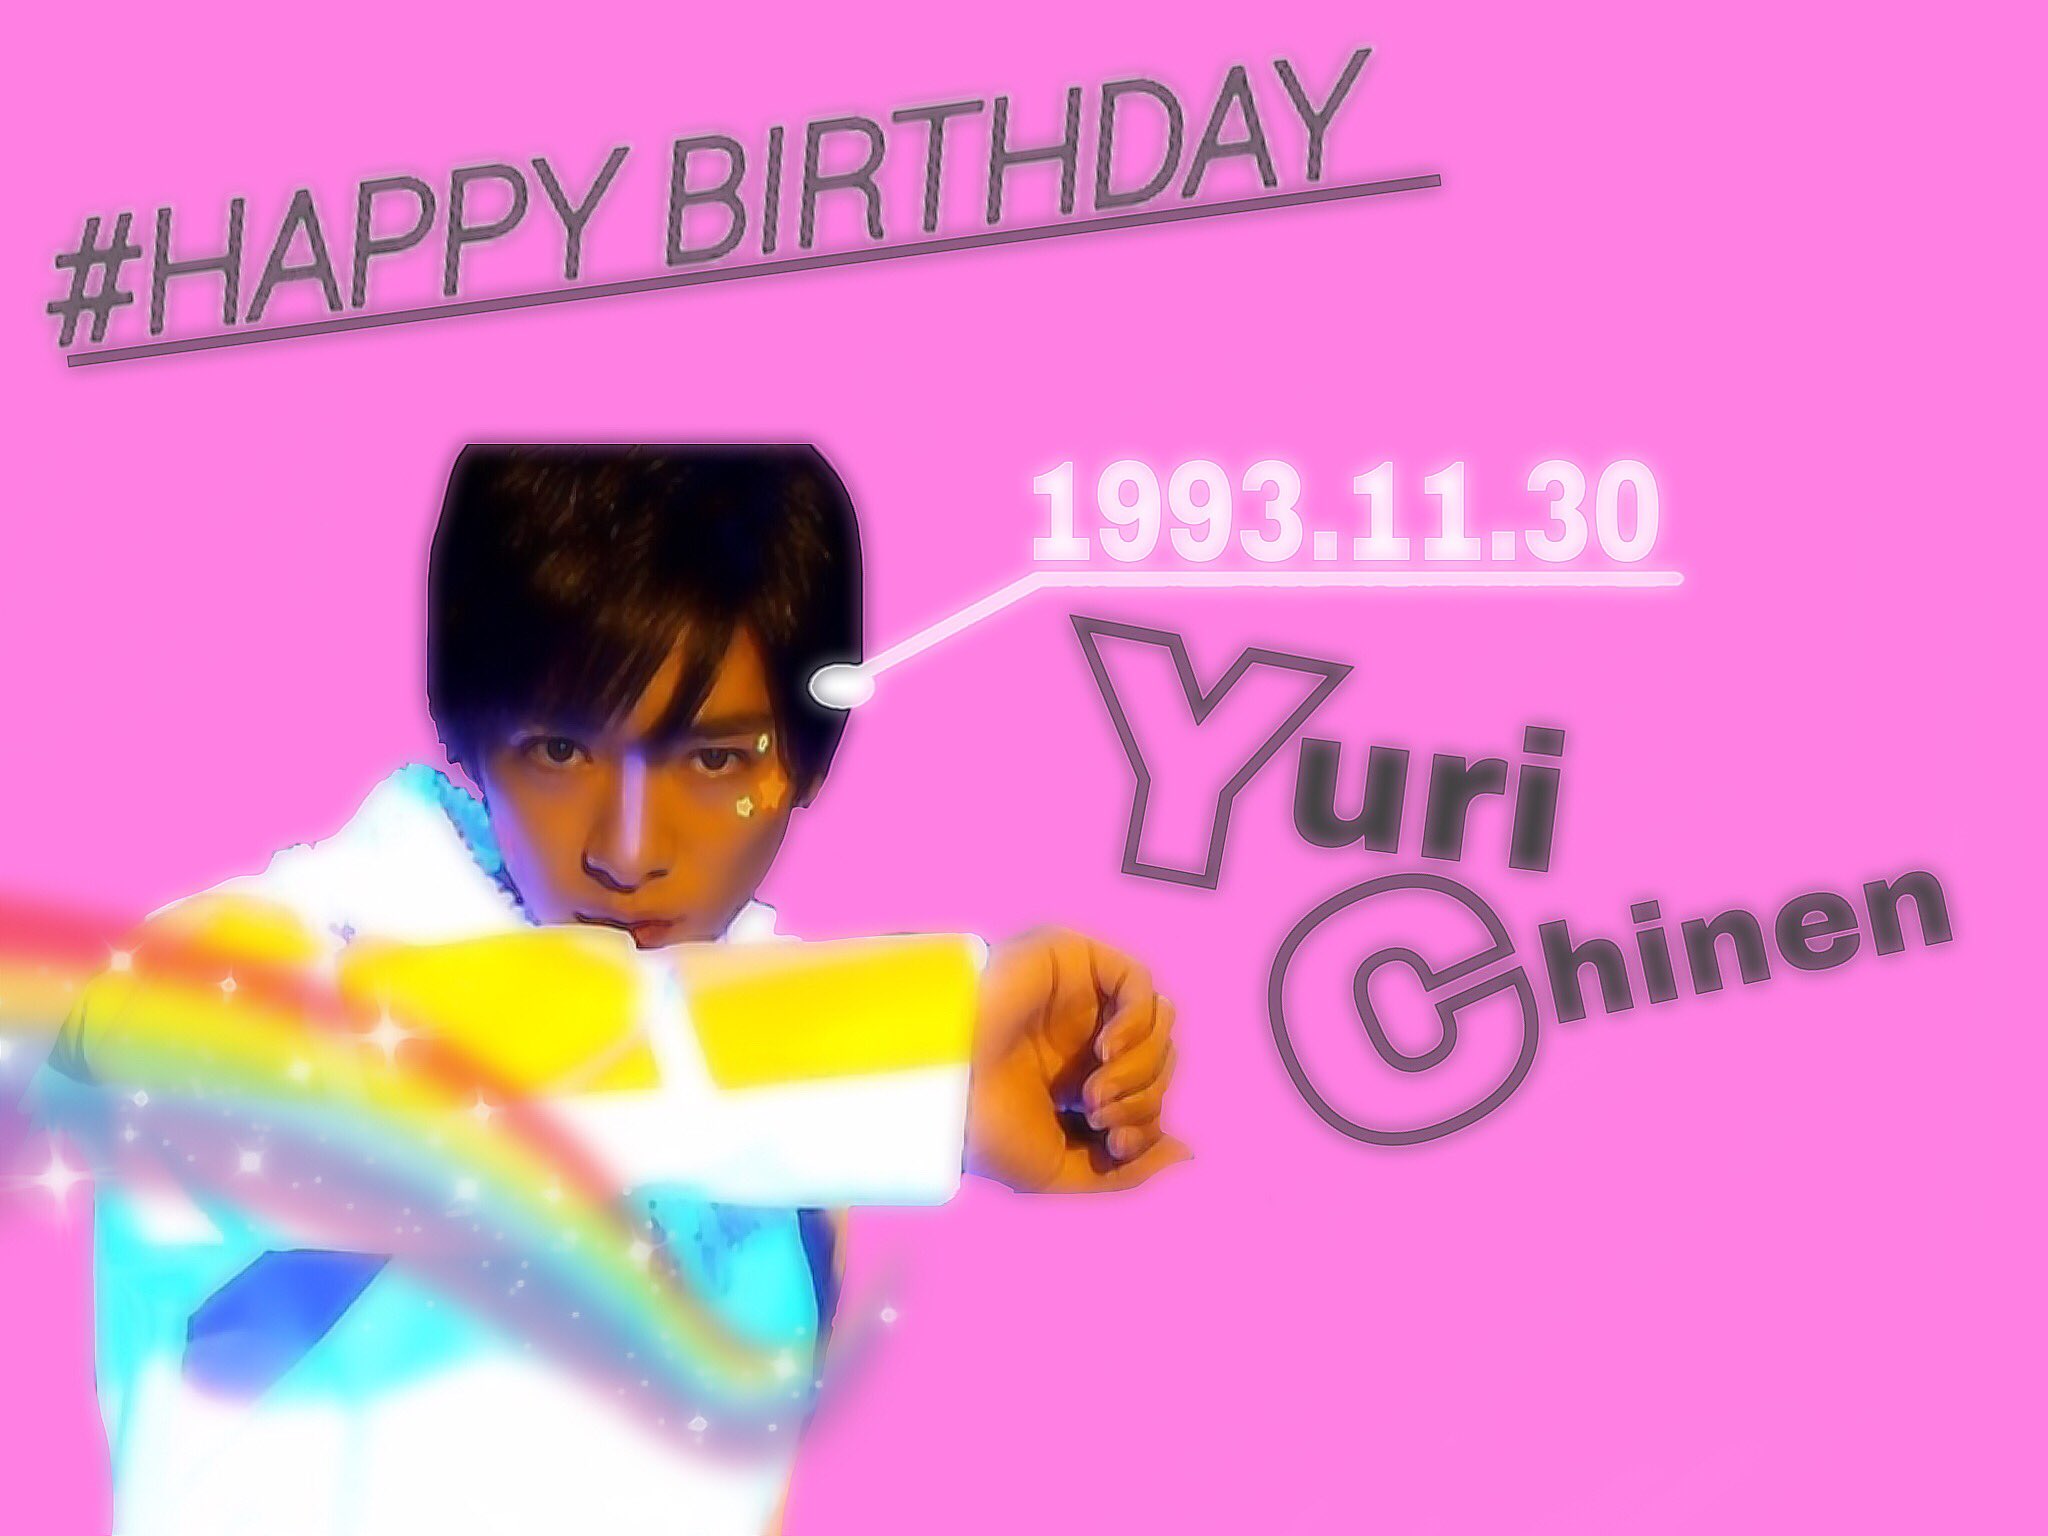  Yuri Chinen  1993.11.30 ~ Happy Birthday    